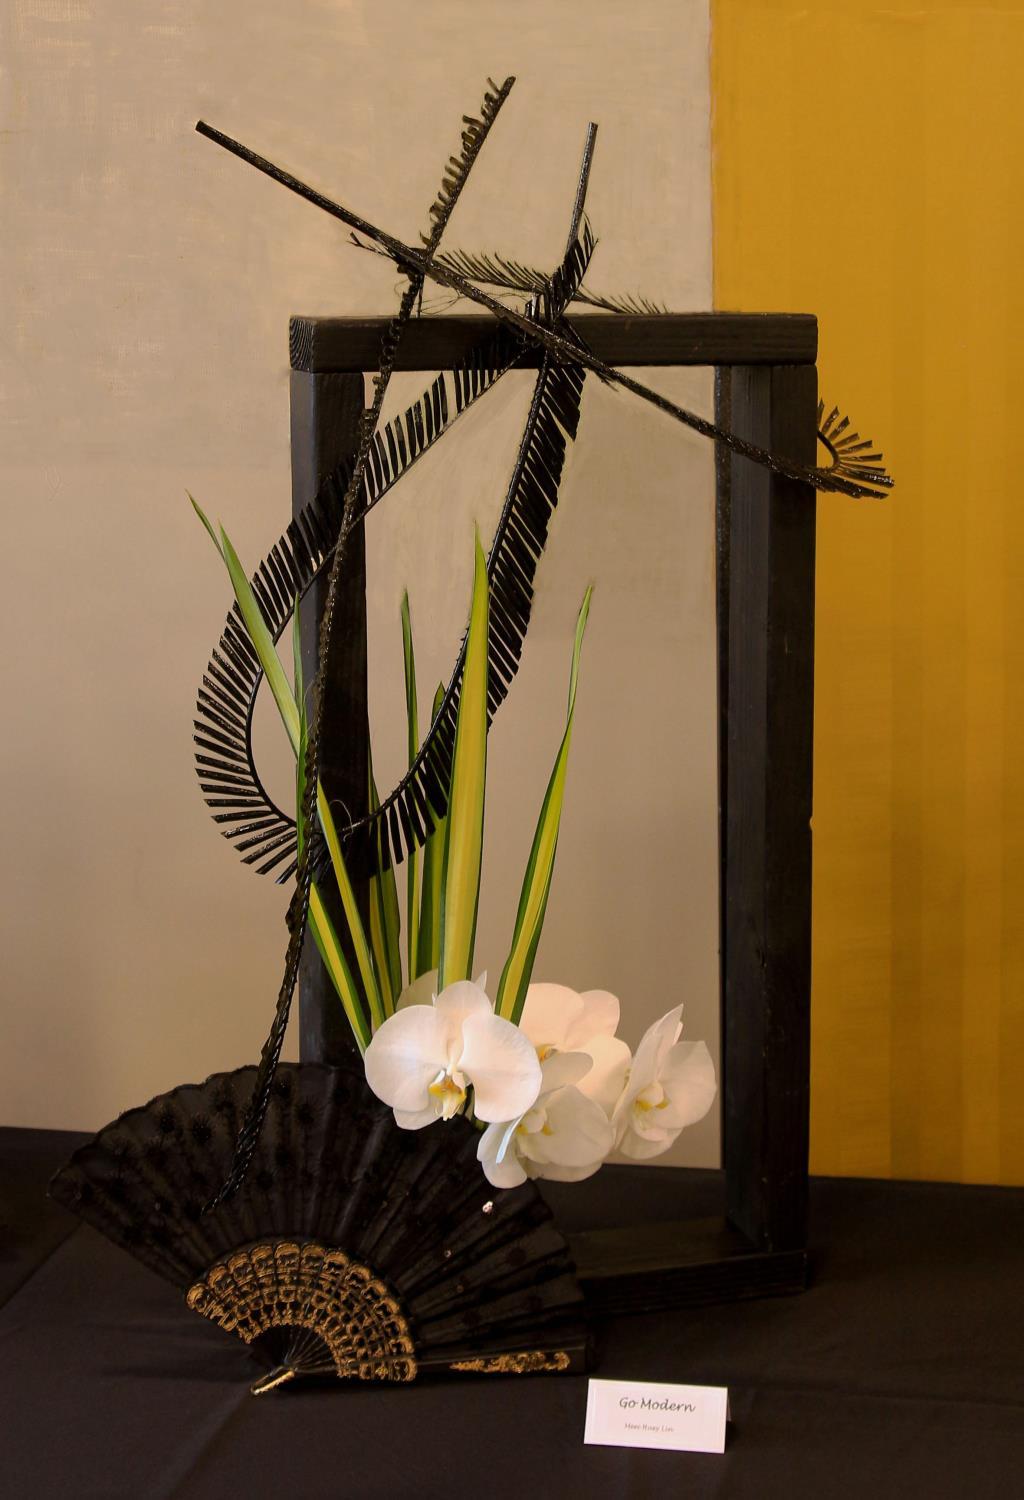 Go Modern By Sensei Meei-Huey Lin Materials: Phalaenopsis, Yucca,